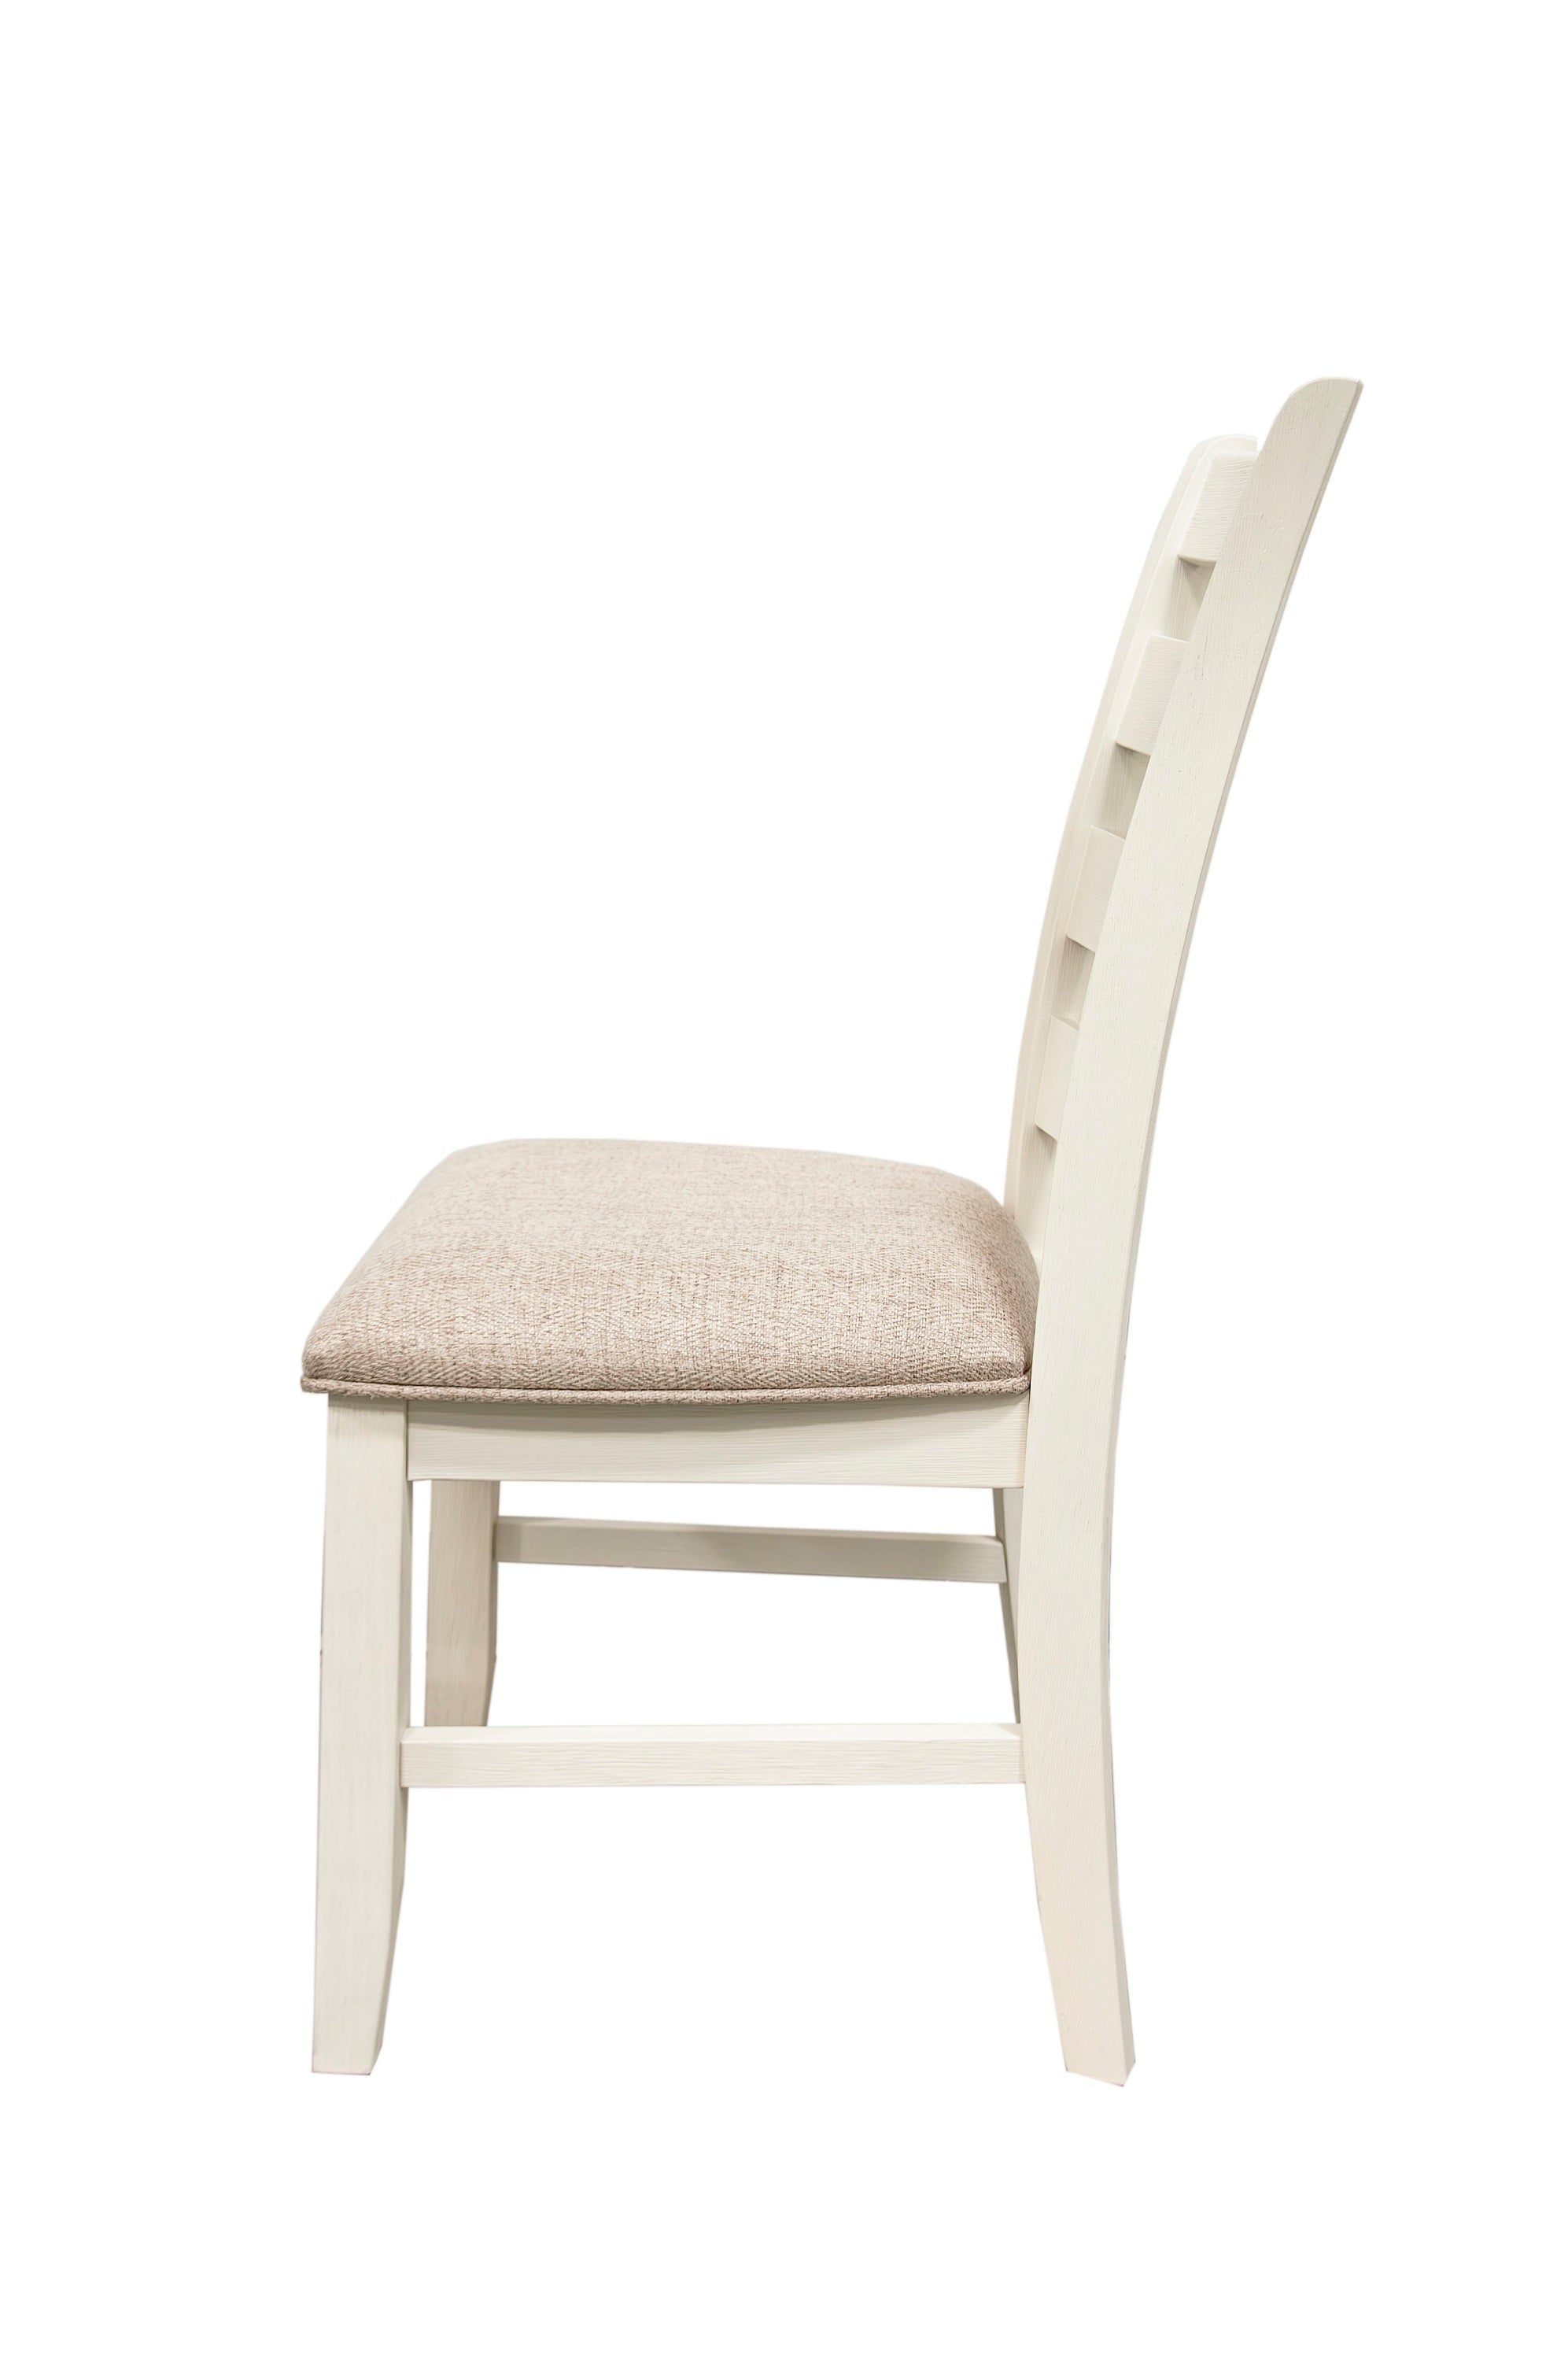 White Classic 2pcs Dining Chairs Set - White